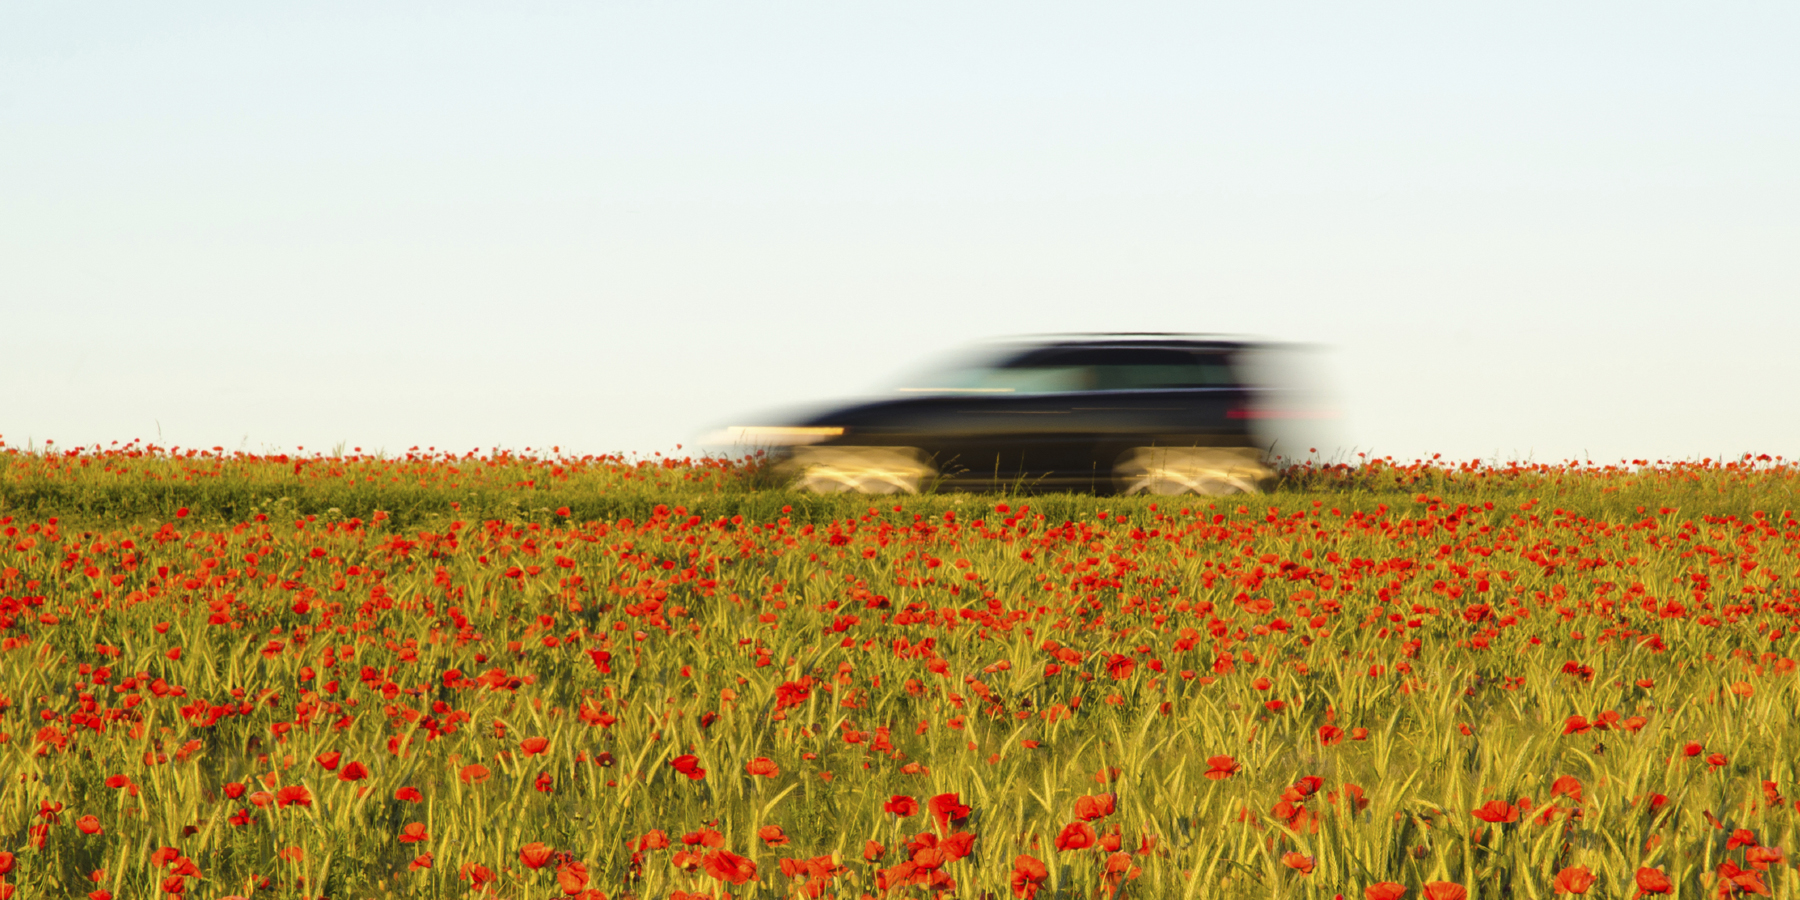 Blurred car driving in a poppy field